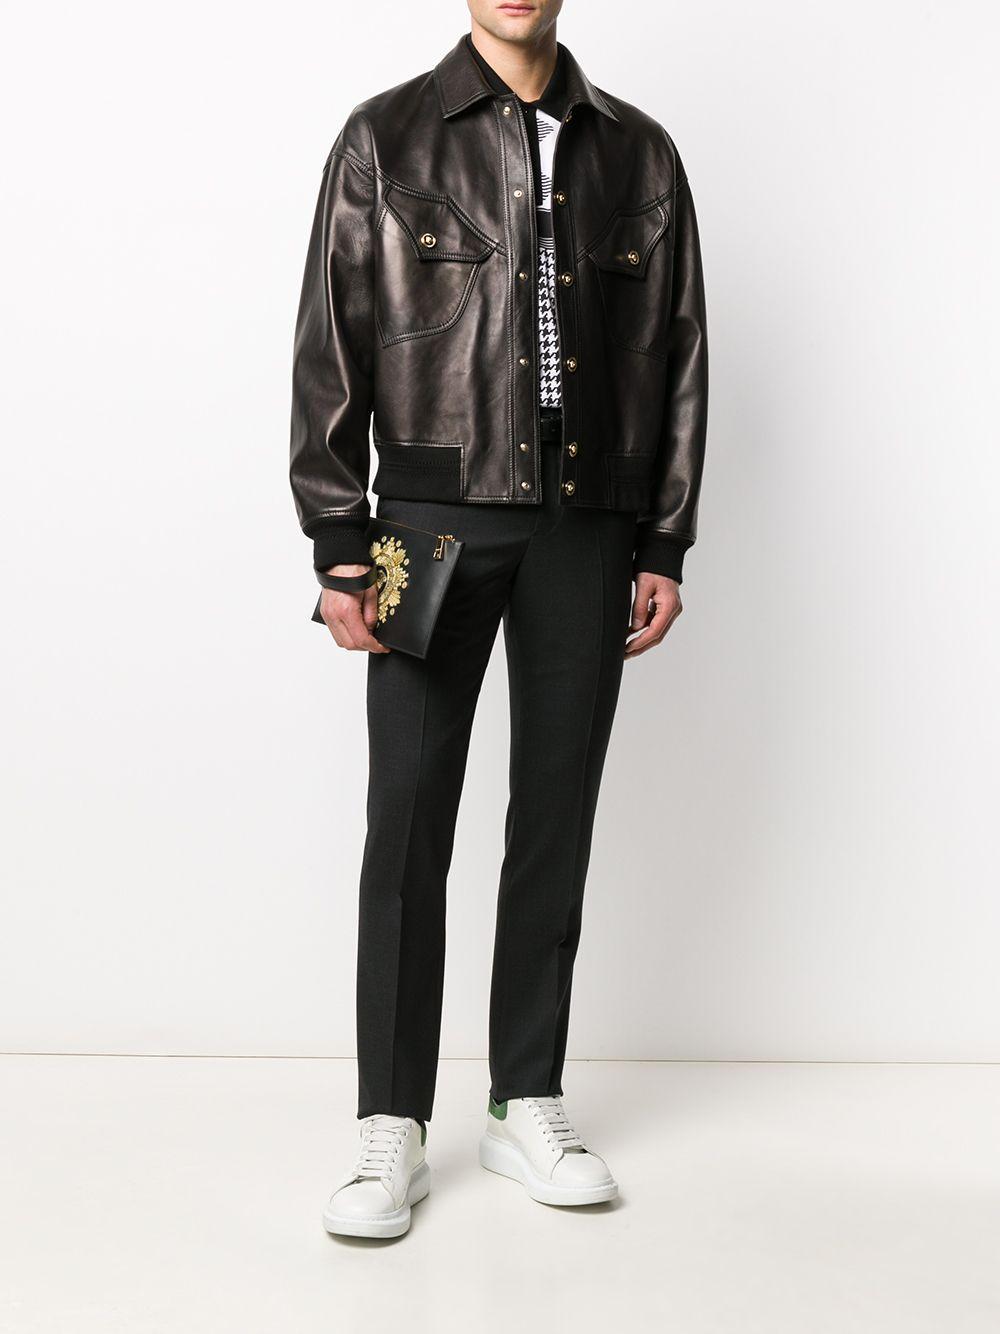 Versace Medusa Head Details Leather Jacket in Brown (Black) for Men - Lyst